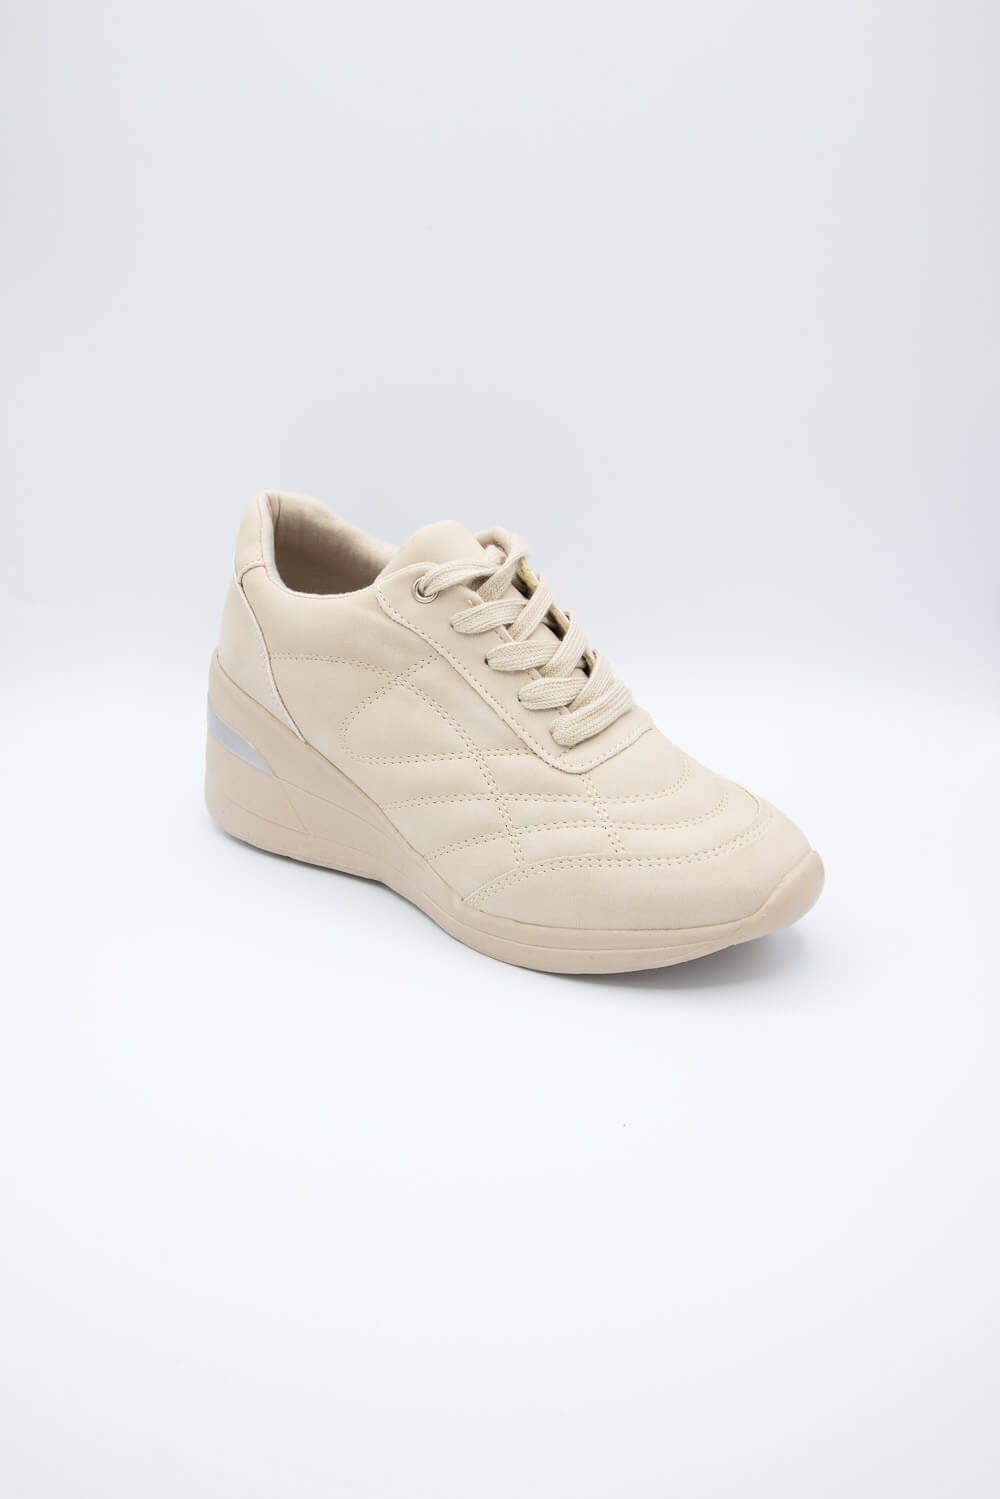 Soda Shoes Annie Wedged Sneakers for Women in Beige | ANNIE-G BEIGE – Glik's